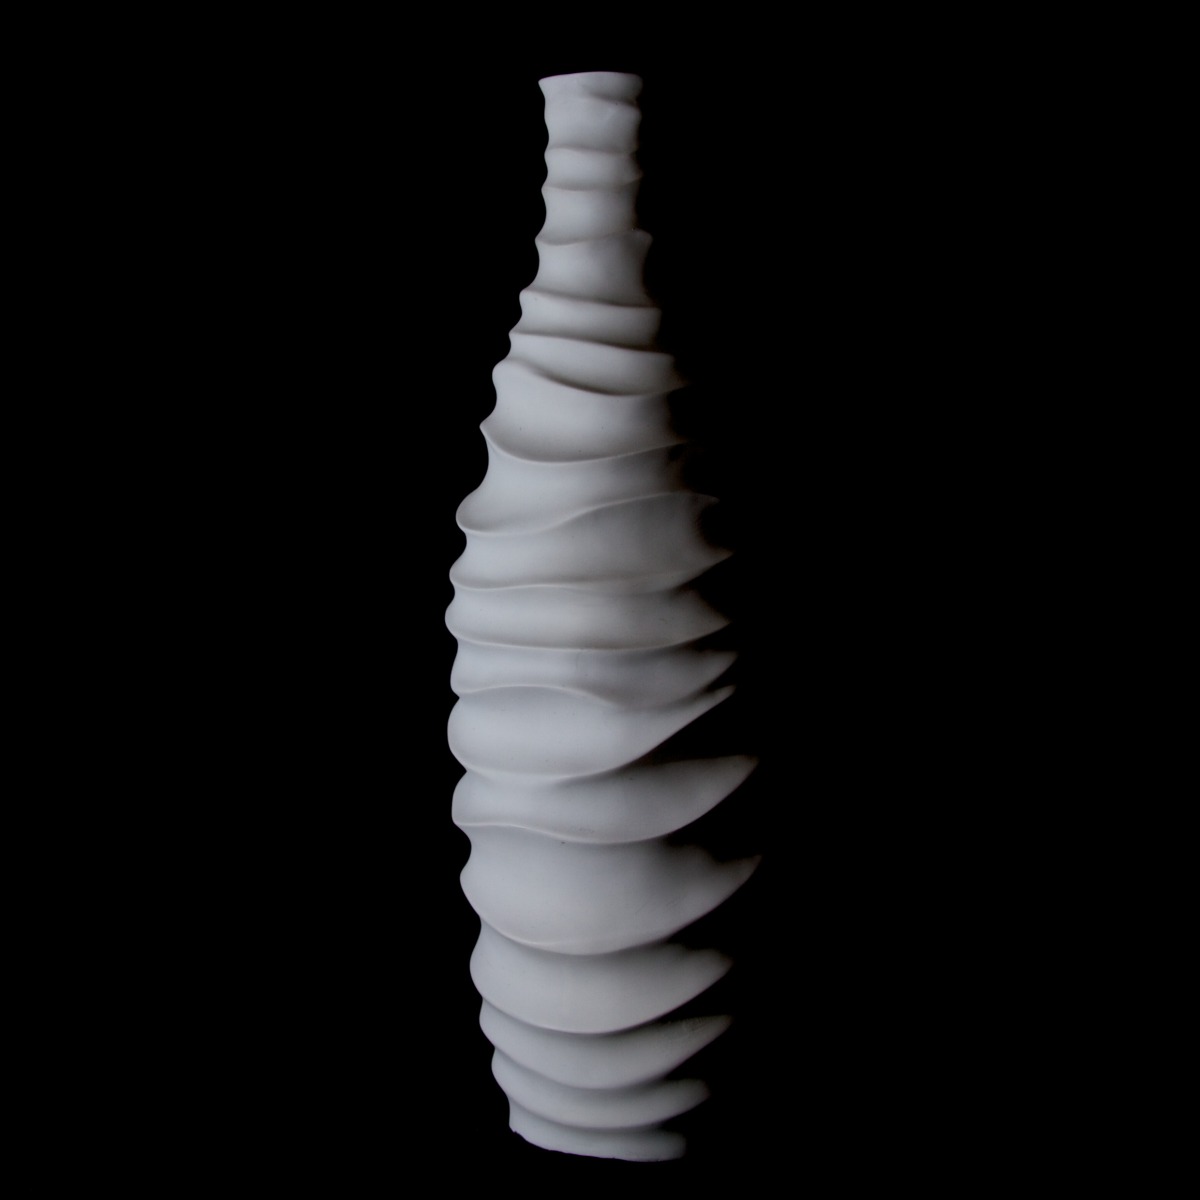 2011-12-24 at 15-43-04 still life white vase light shadow bone waves.jpg